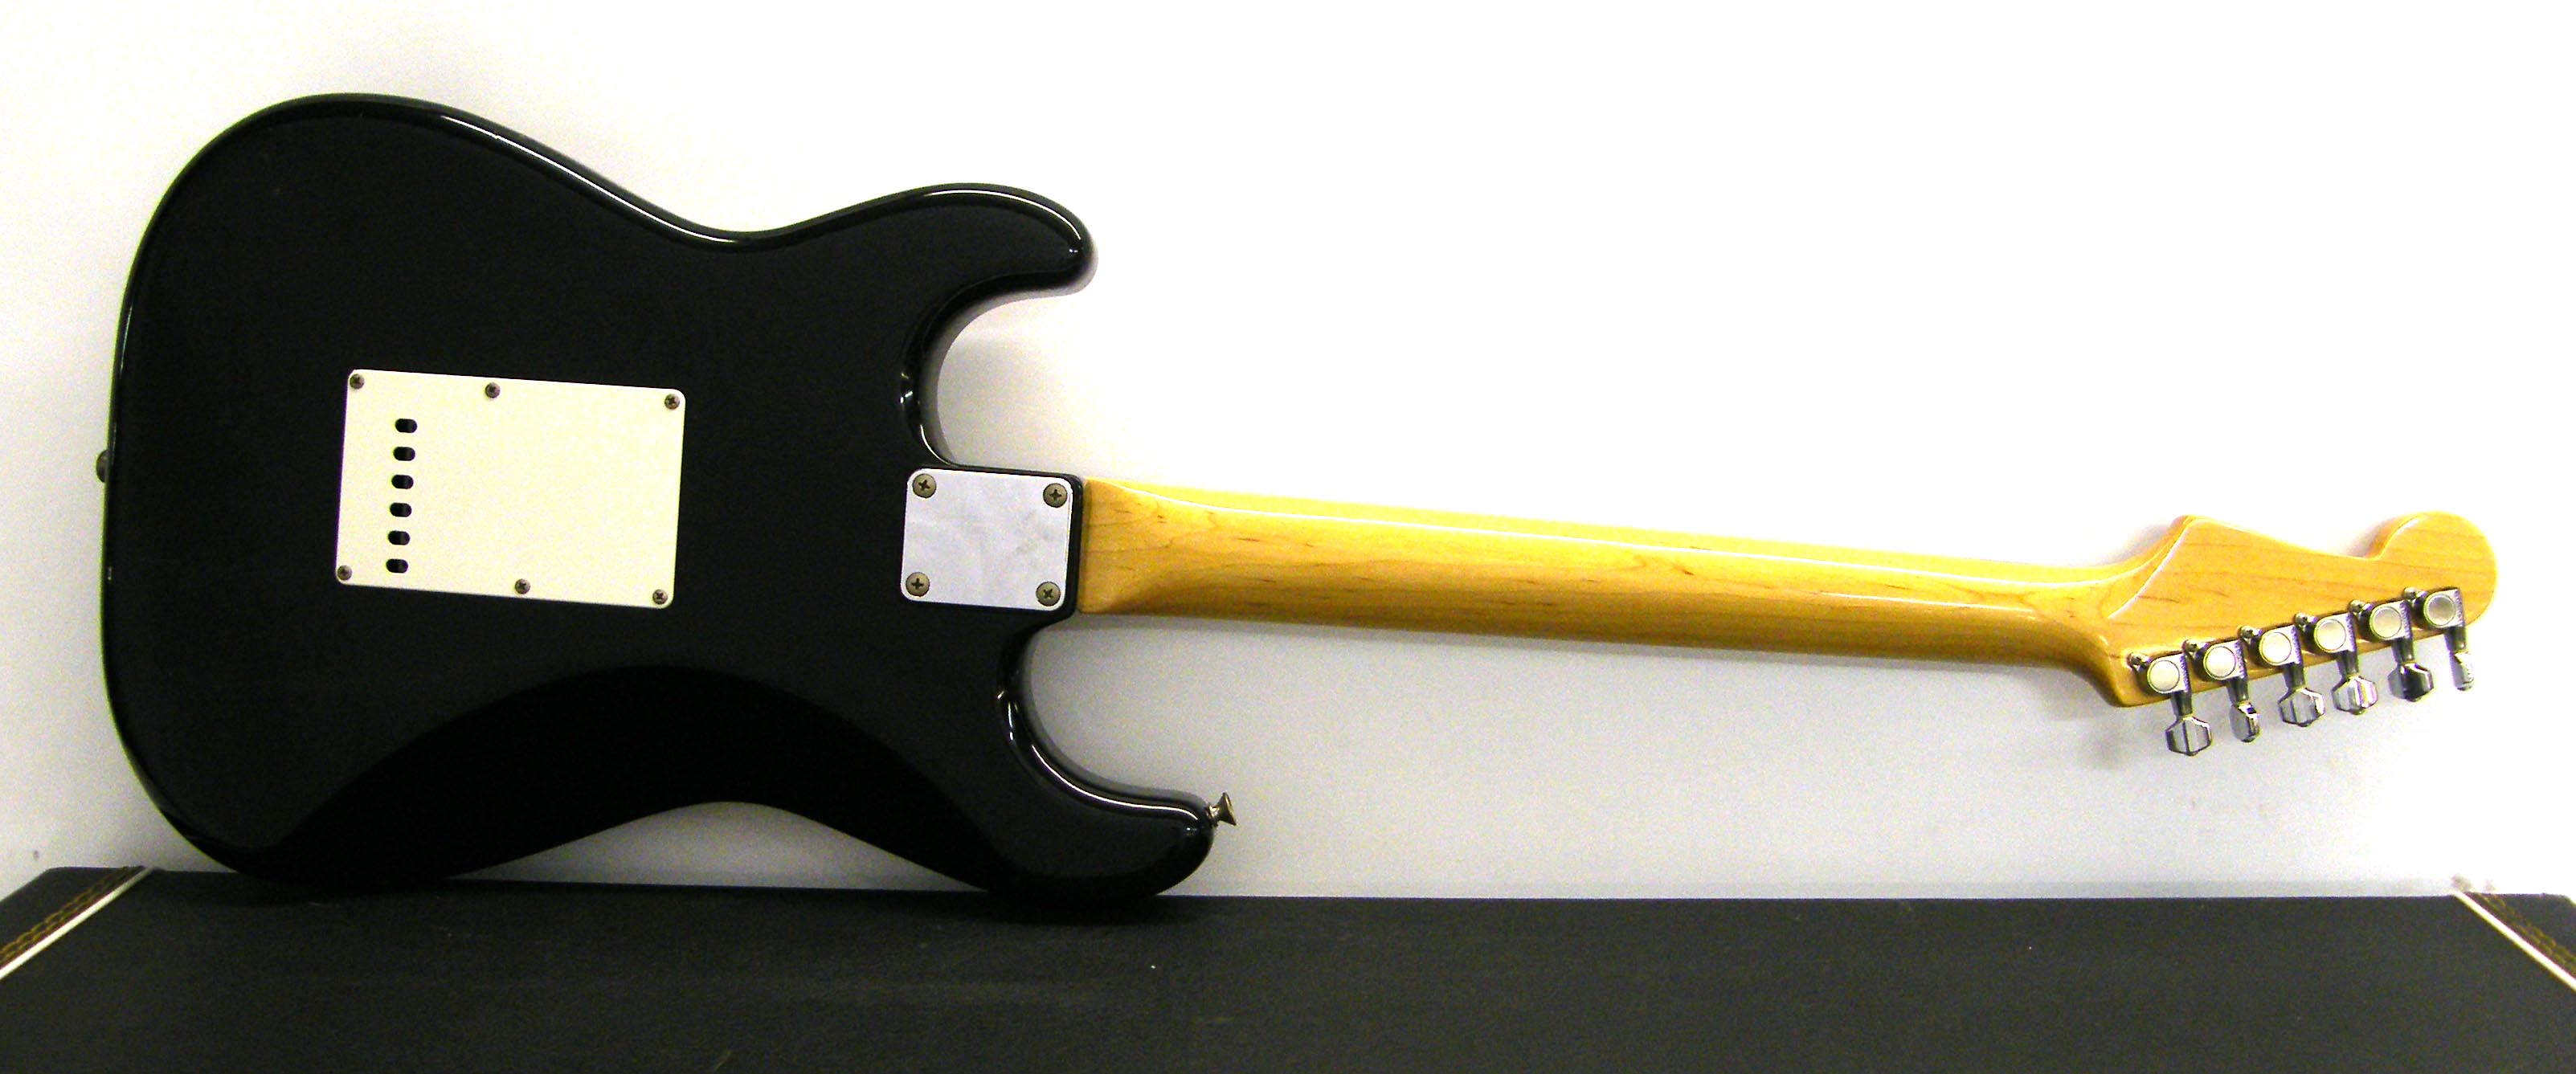 Mid 1980s Fender ST-362V Stratocaster electric guitar, made in Japan, ser. no. E947157, black finish - Image 2 of 2